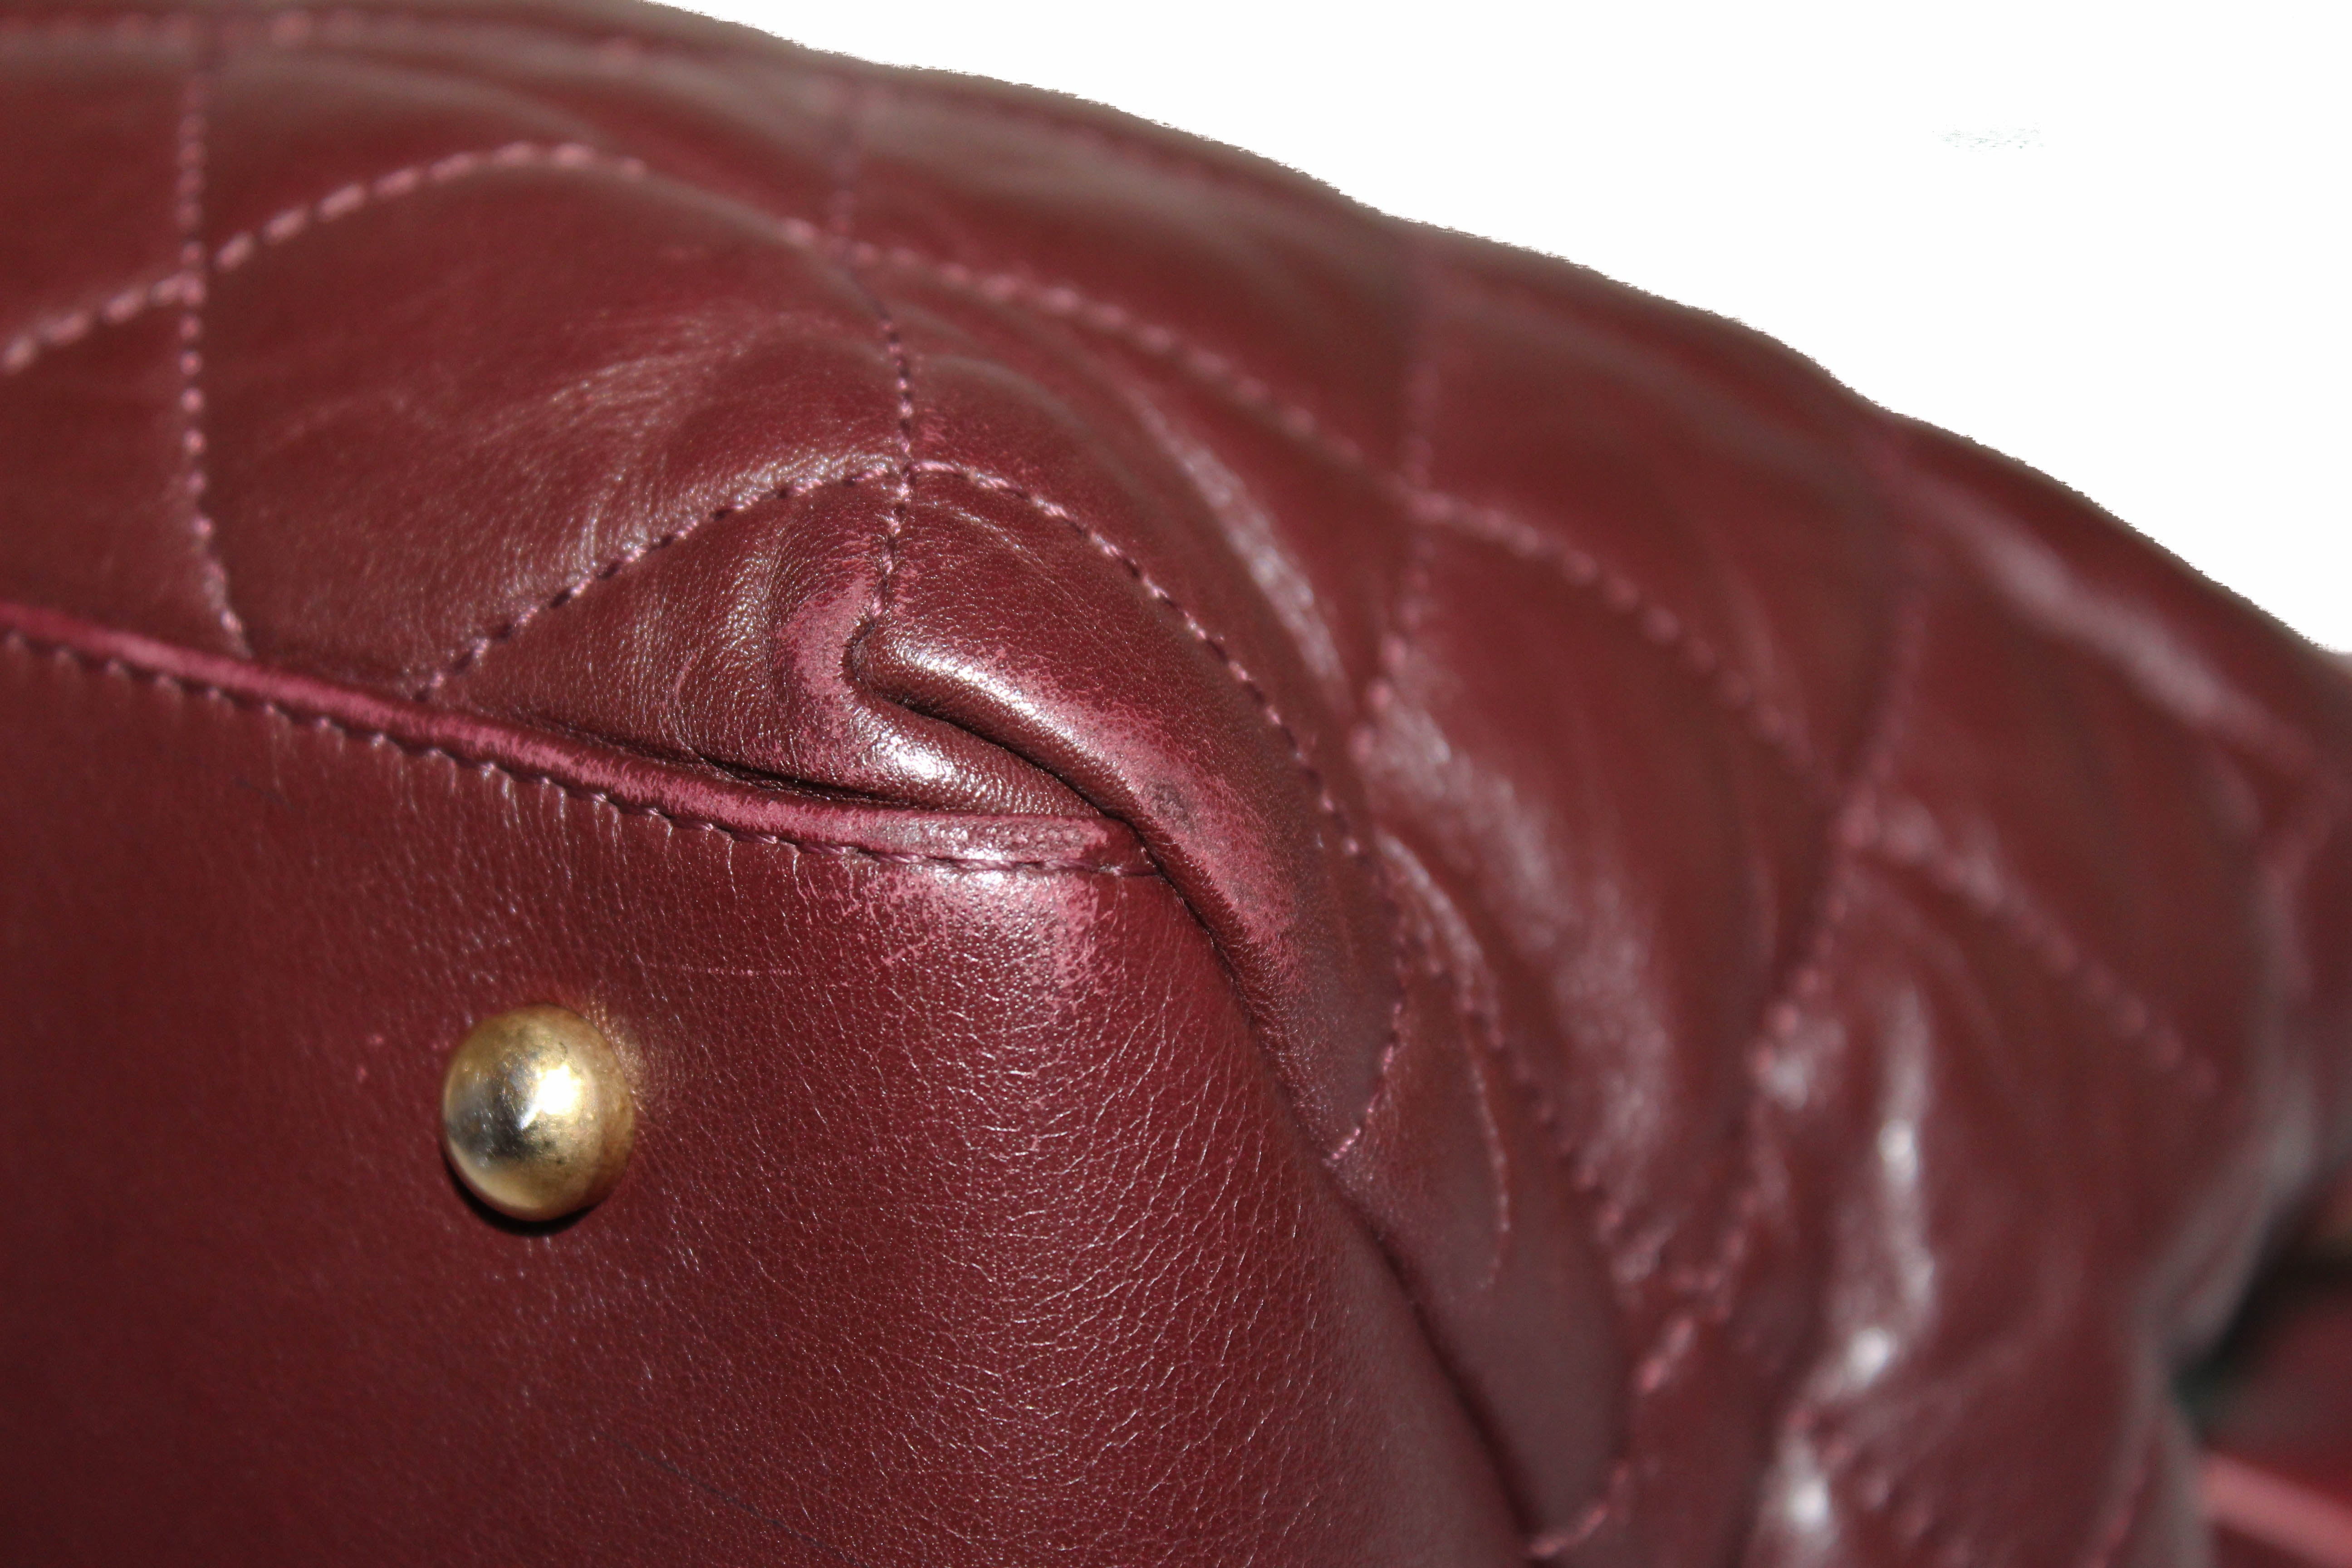 CN0021 Chanel 31 Rue Cambon Paris Bag in Original Leather A67824